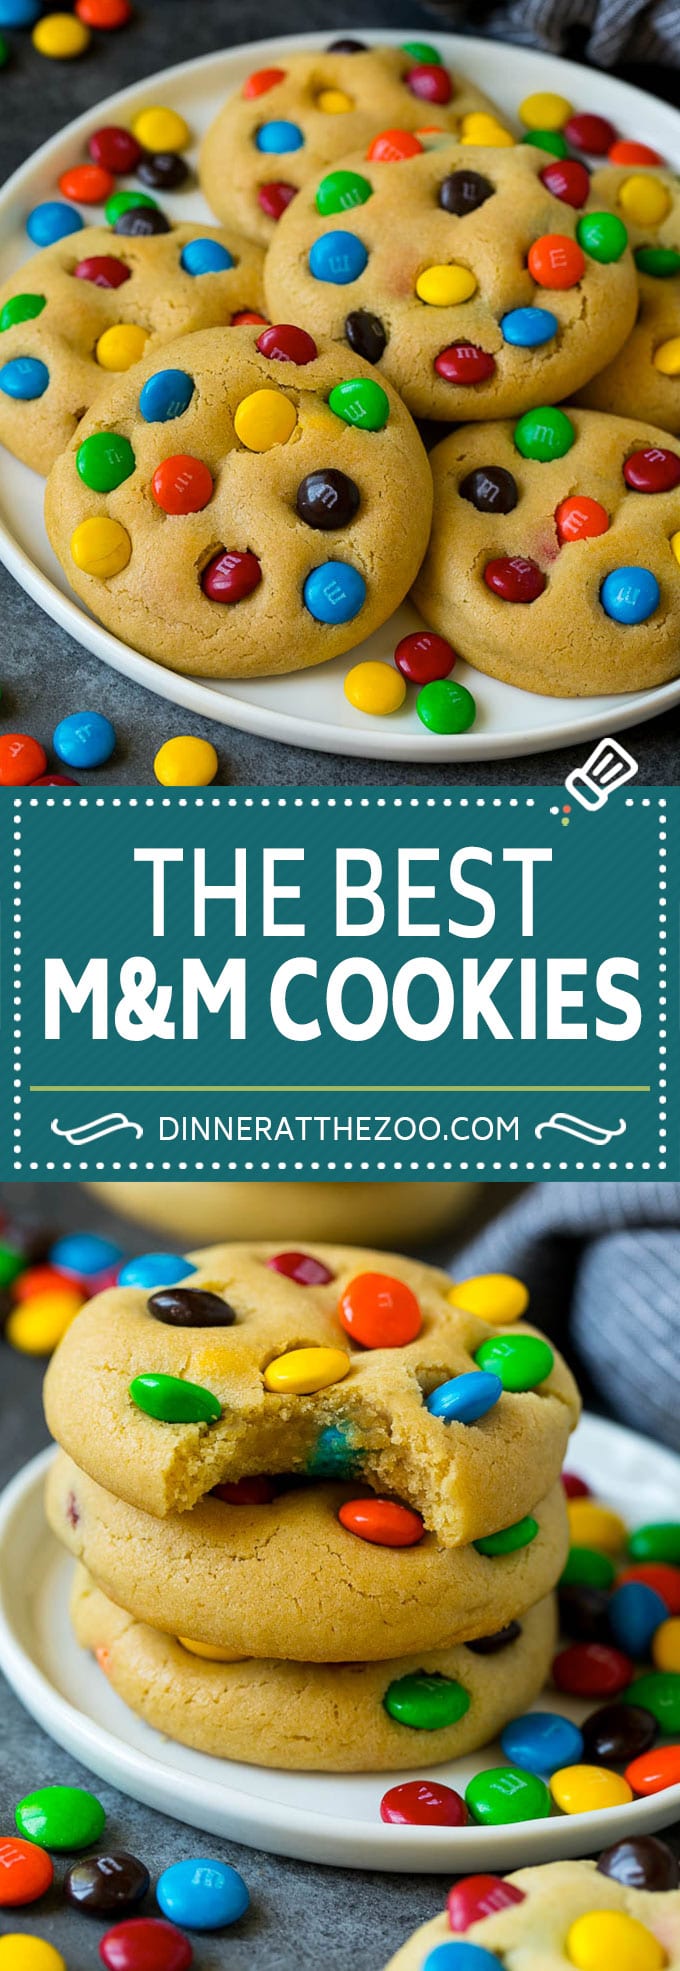 M&M Cookies Recipe #cookies #chocolate #baking #dessert #sweets #dinneratthezoo